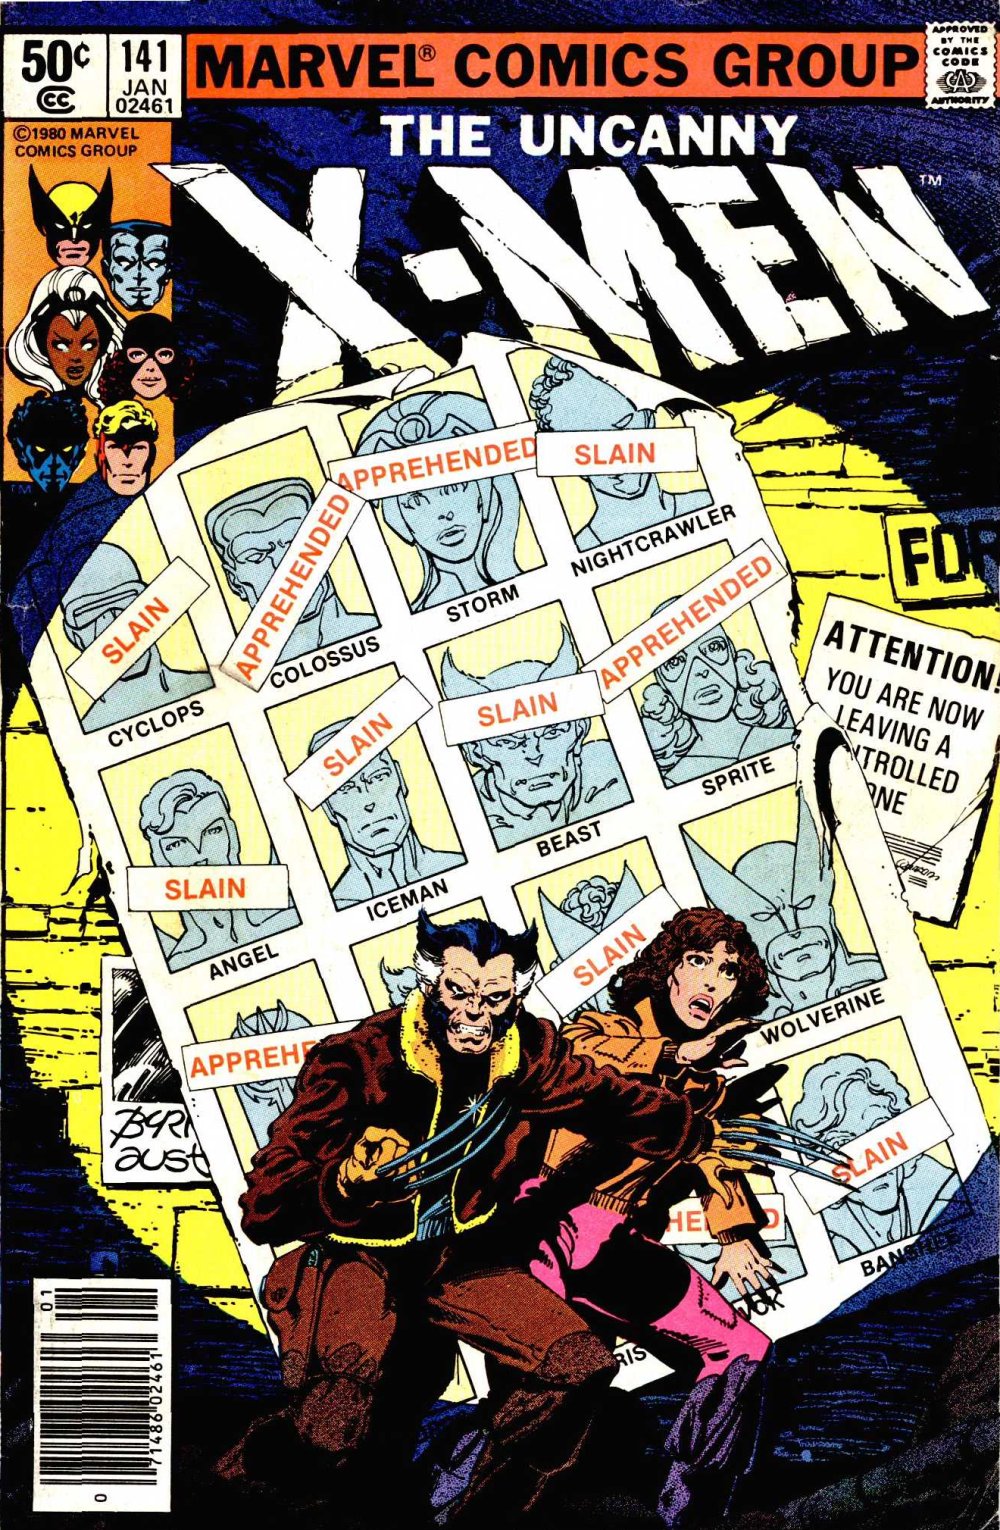 1980s 1990s THE UNCANNY XMEN key issues Marvel